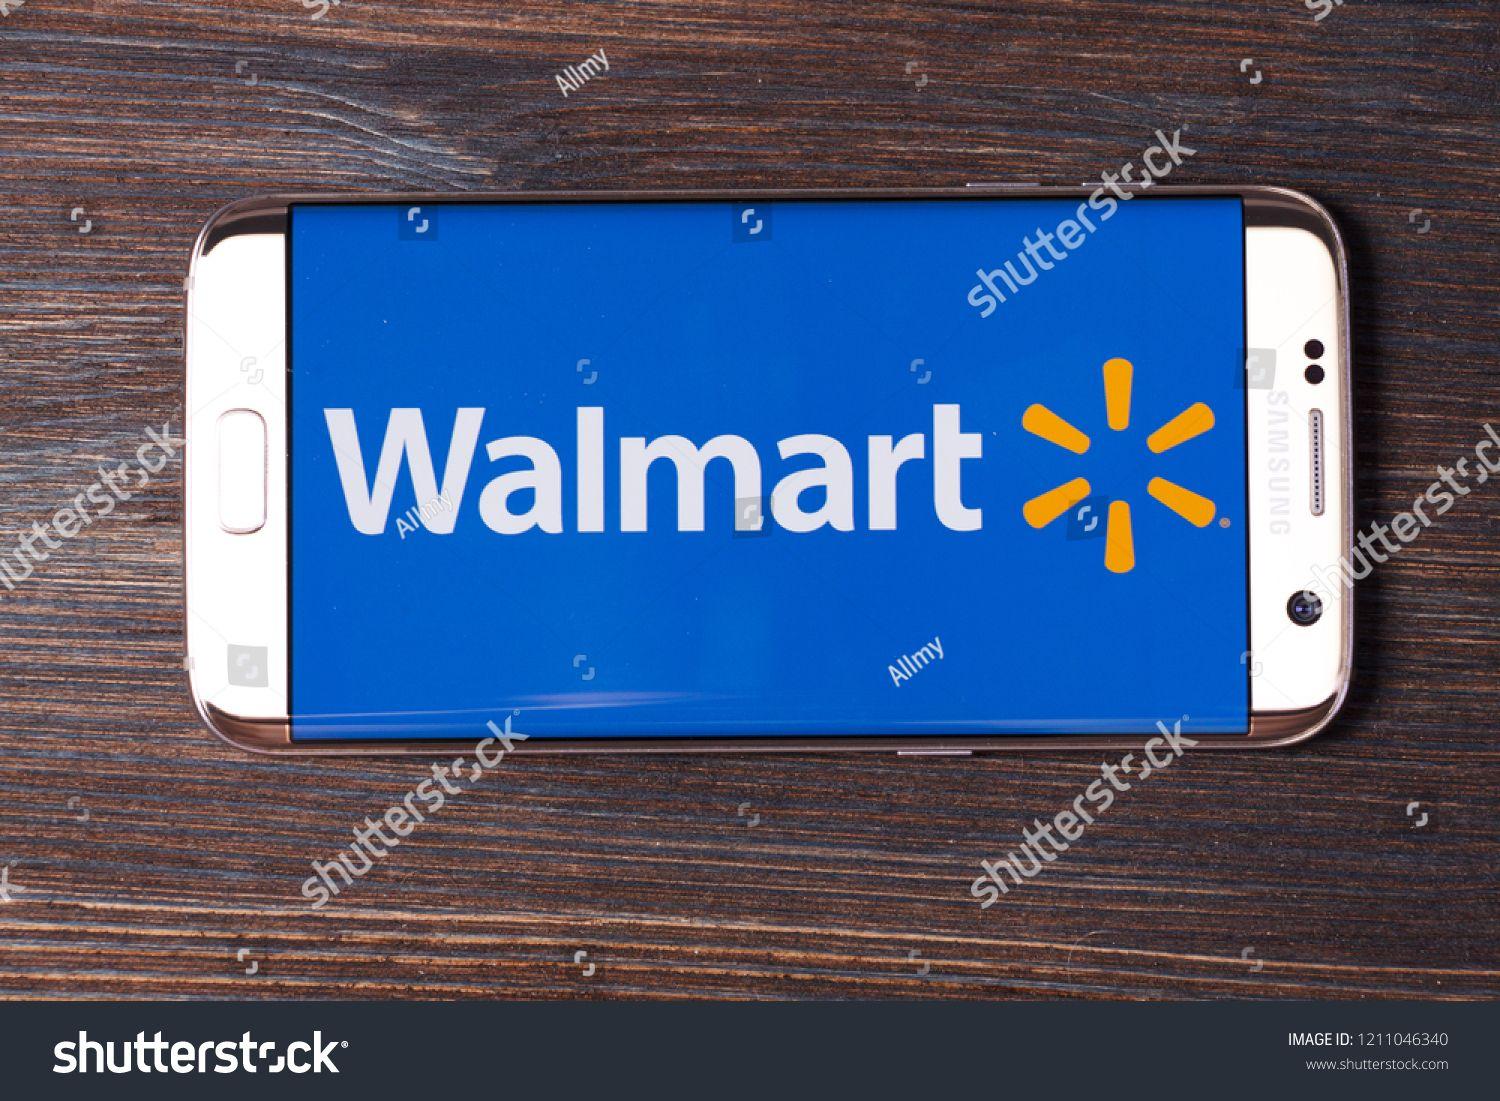 Walmart App Logo - Kazan, Russian Federation - Aug 5, 2018: Walmart app logo on Samsung ...